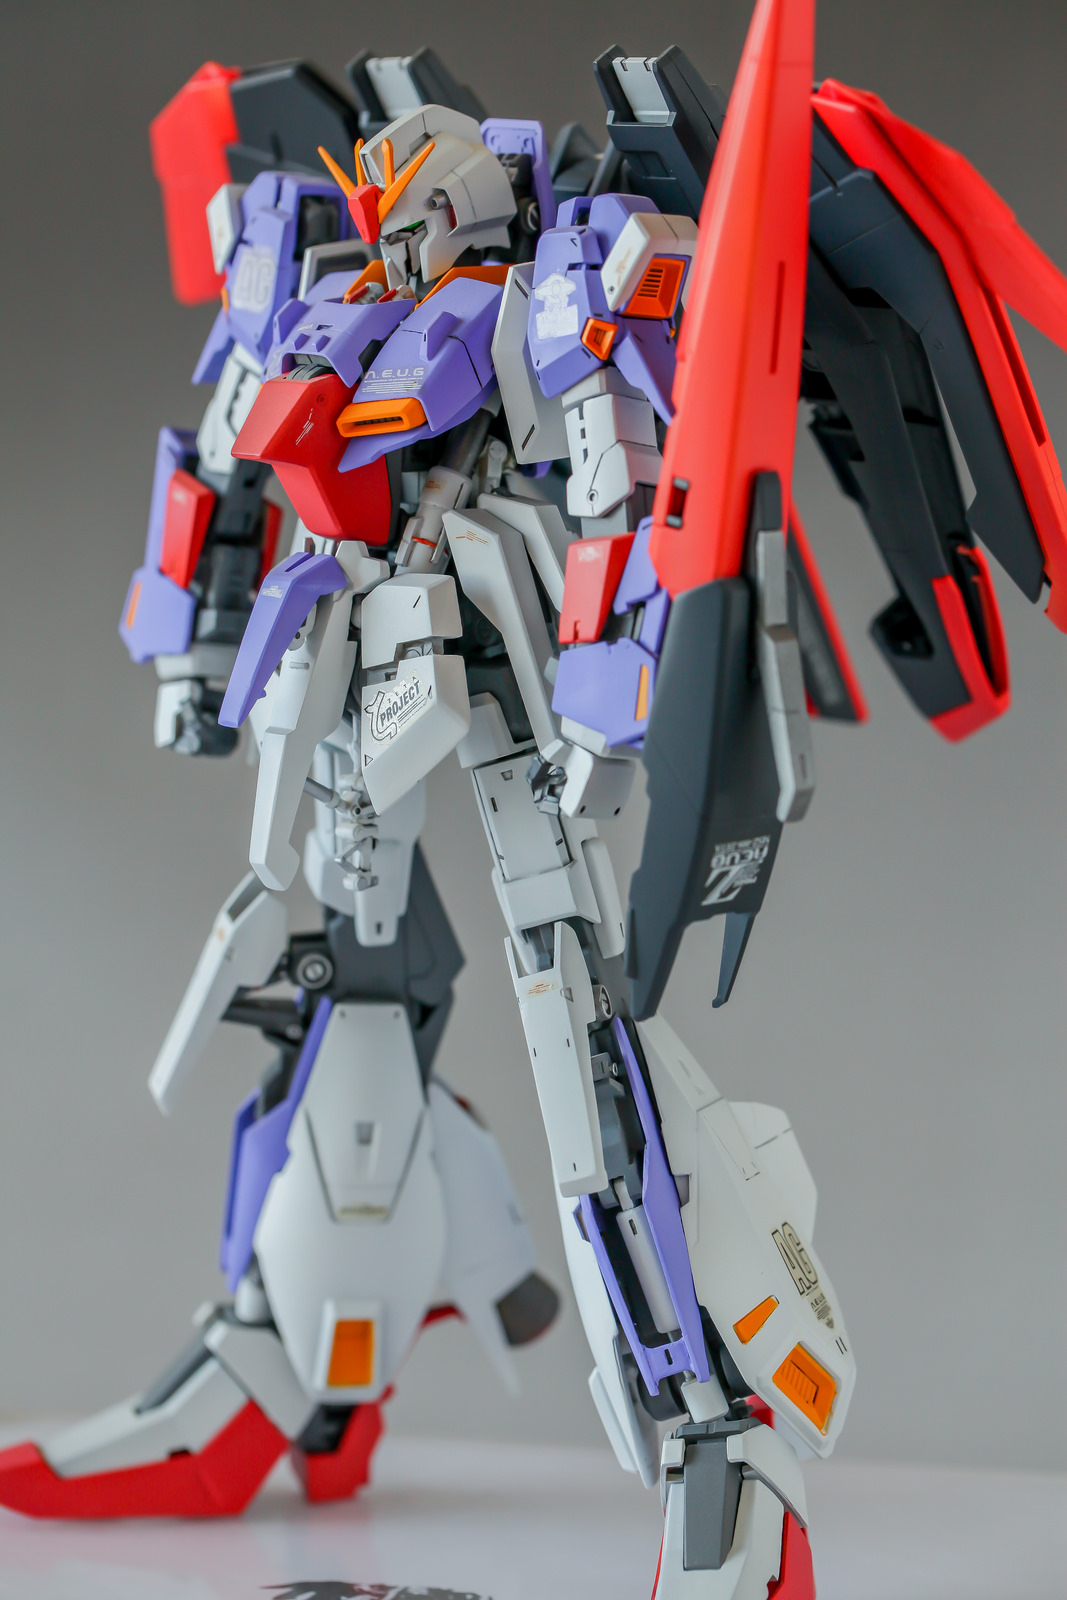 1:100 MSZ-006 Zeta Gundam Evolve Ver. GMG conversion kit: Modeled by S